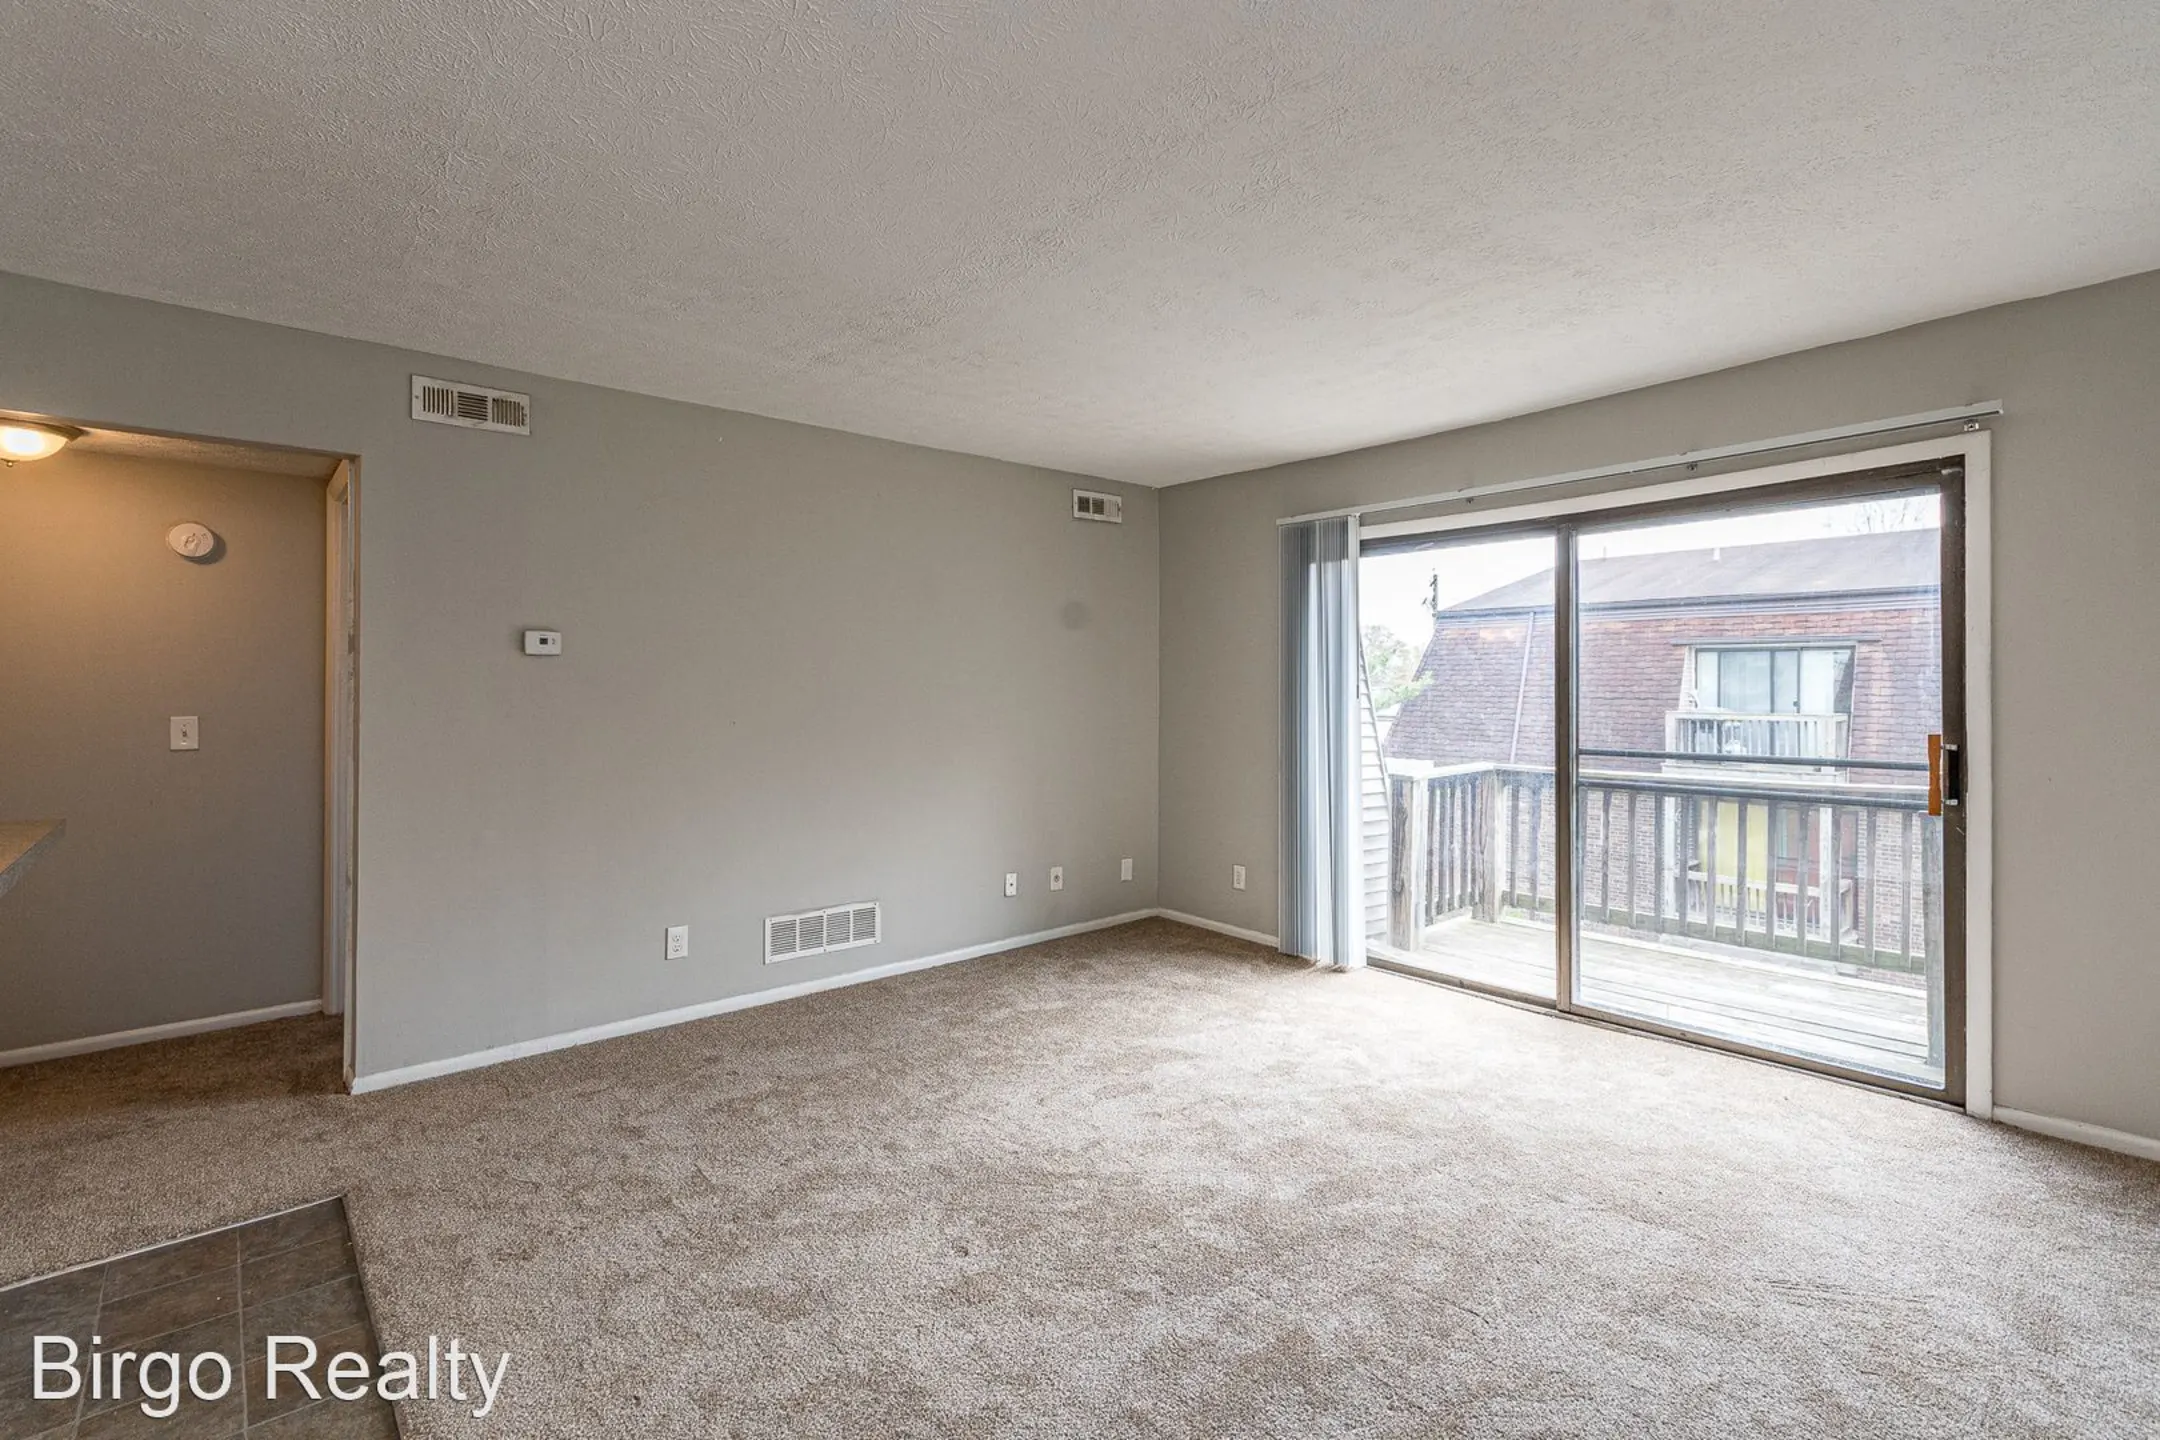 Living Room - Huntley Ridge Apartments - Harrison, OH